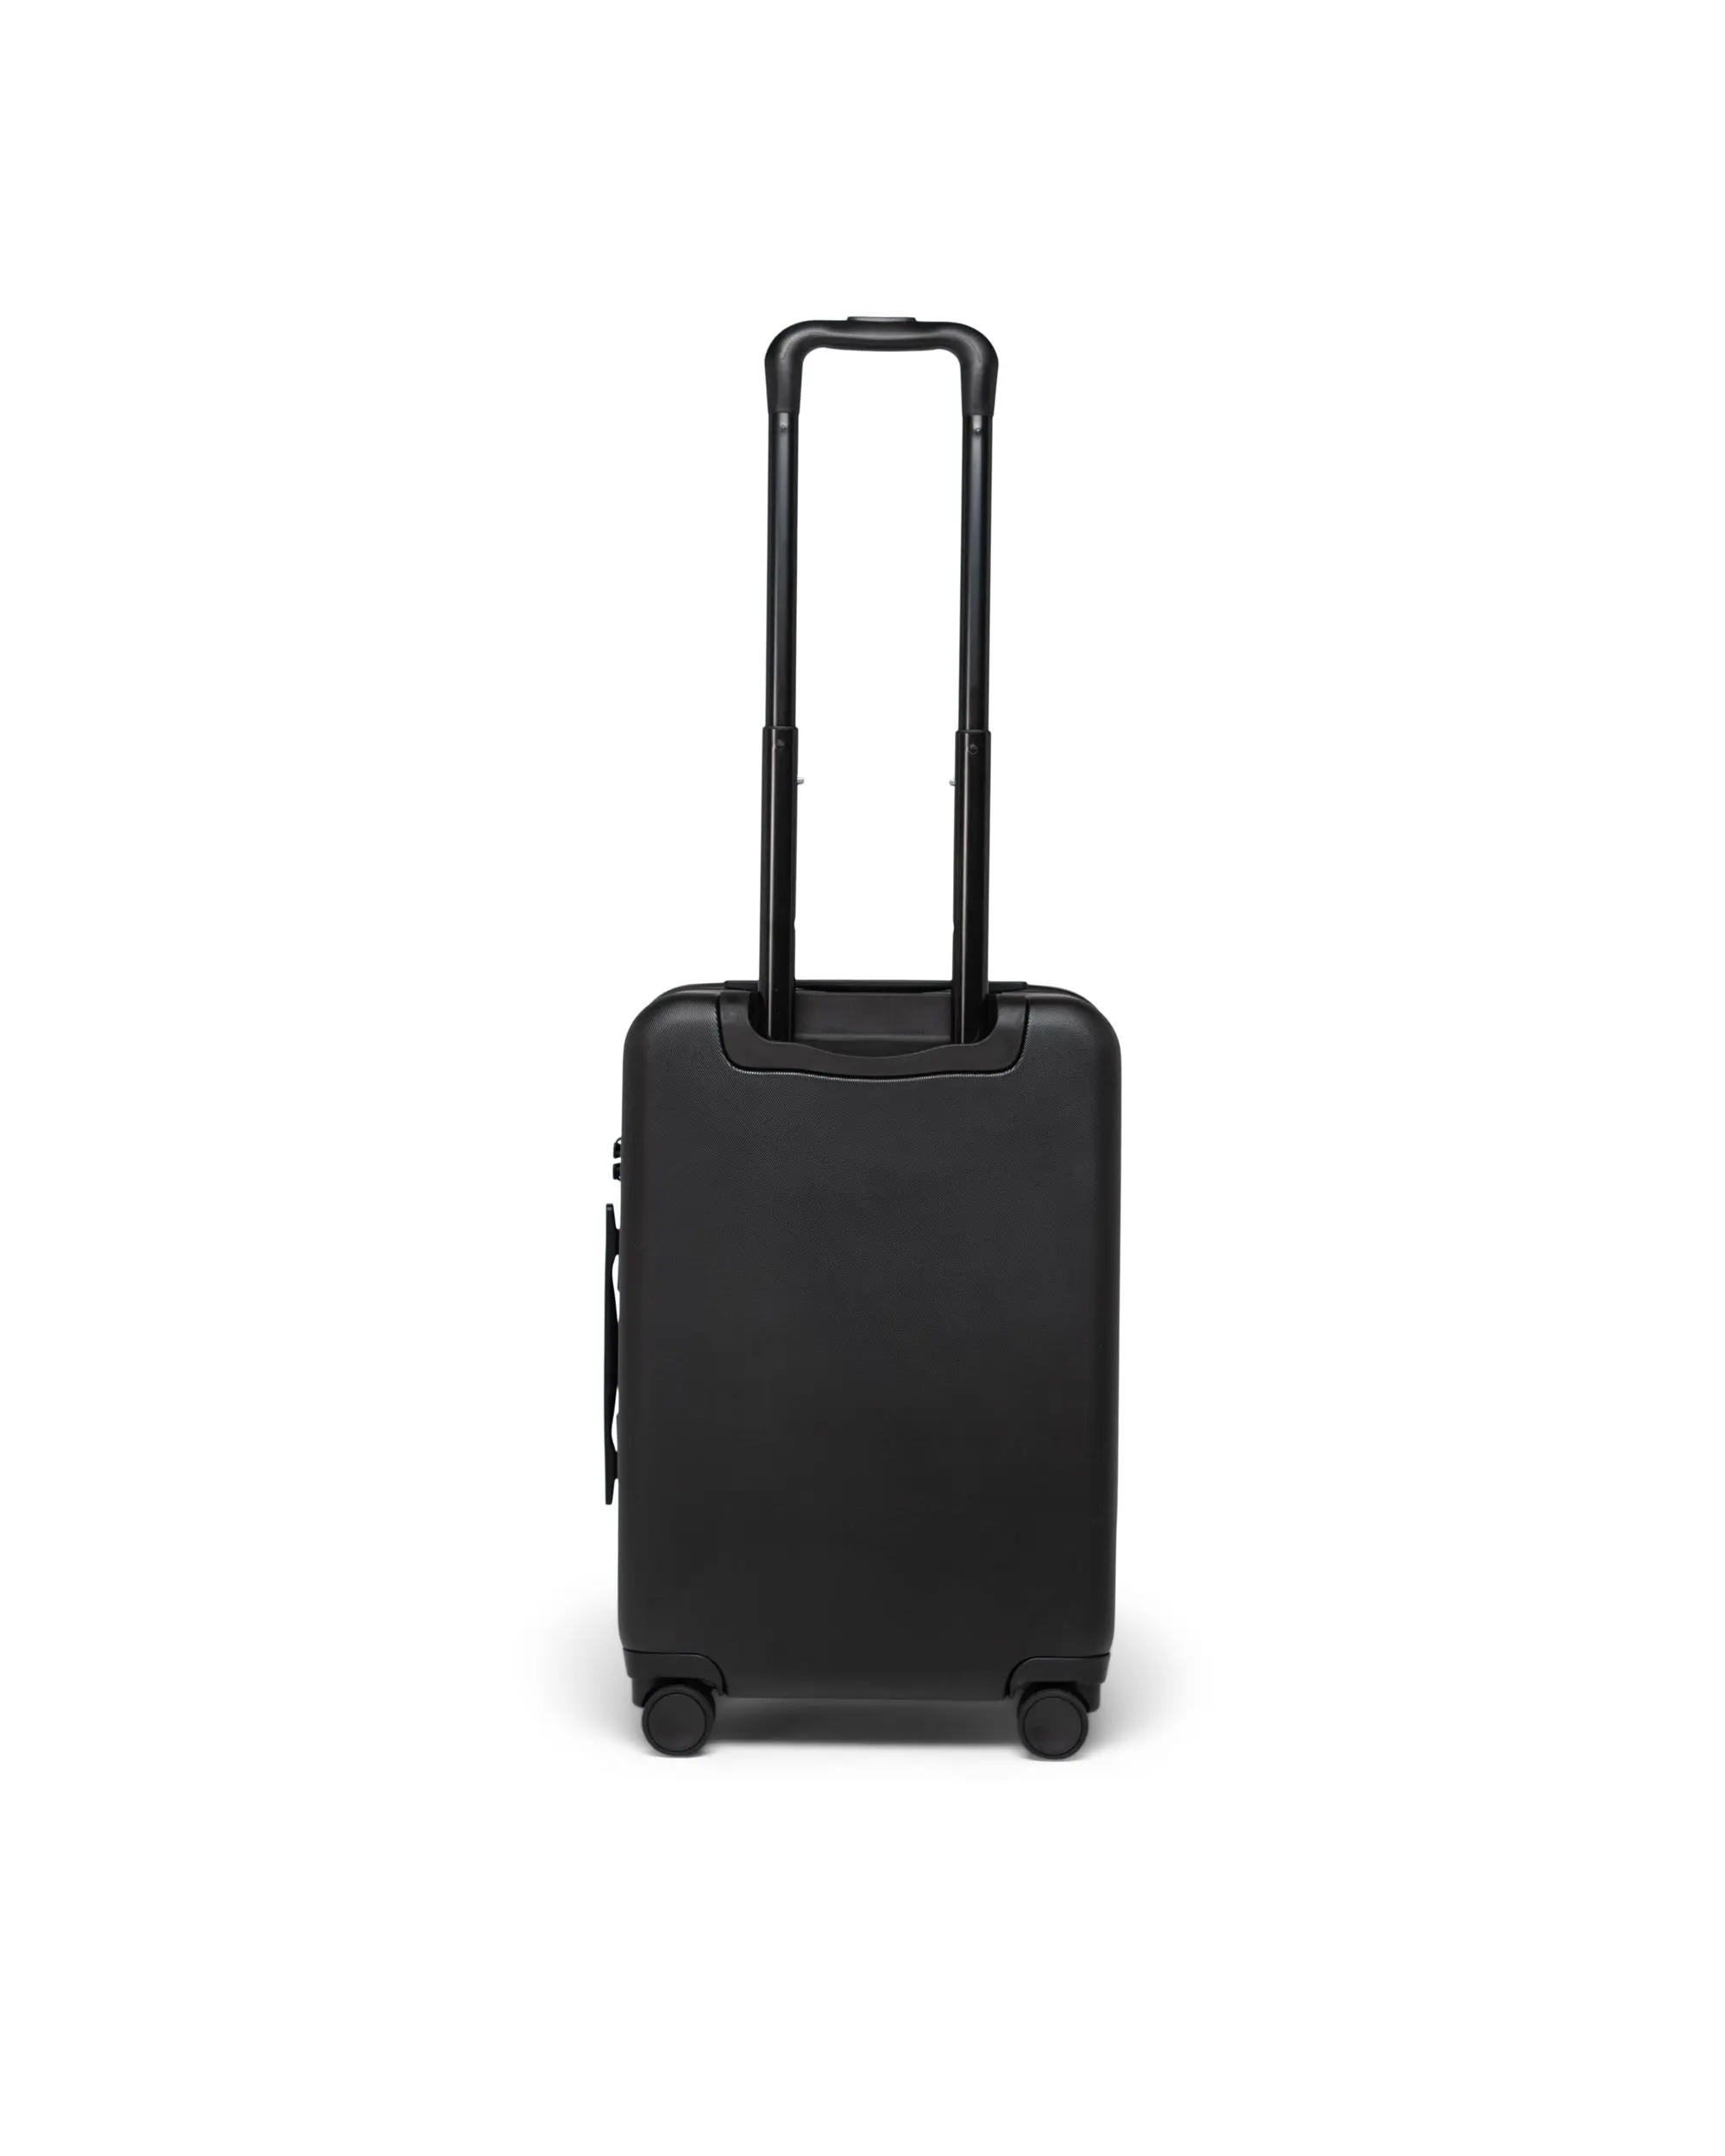 Premium Carry-On Luggage, Lifetime Warranty